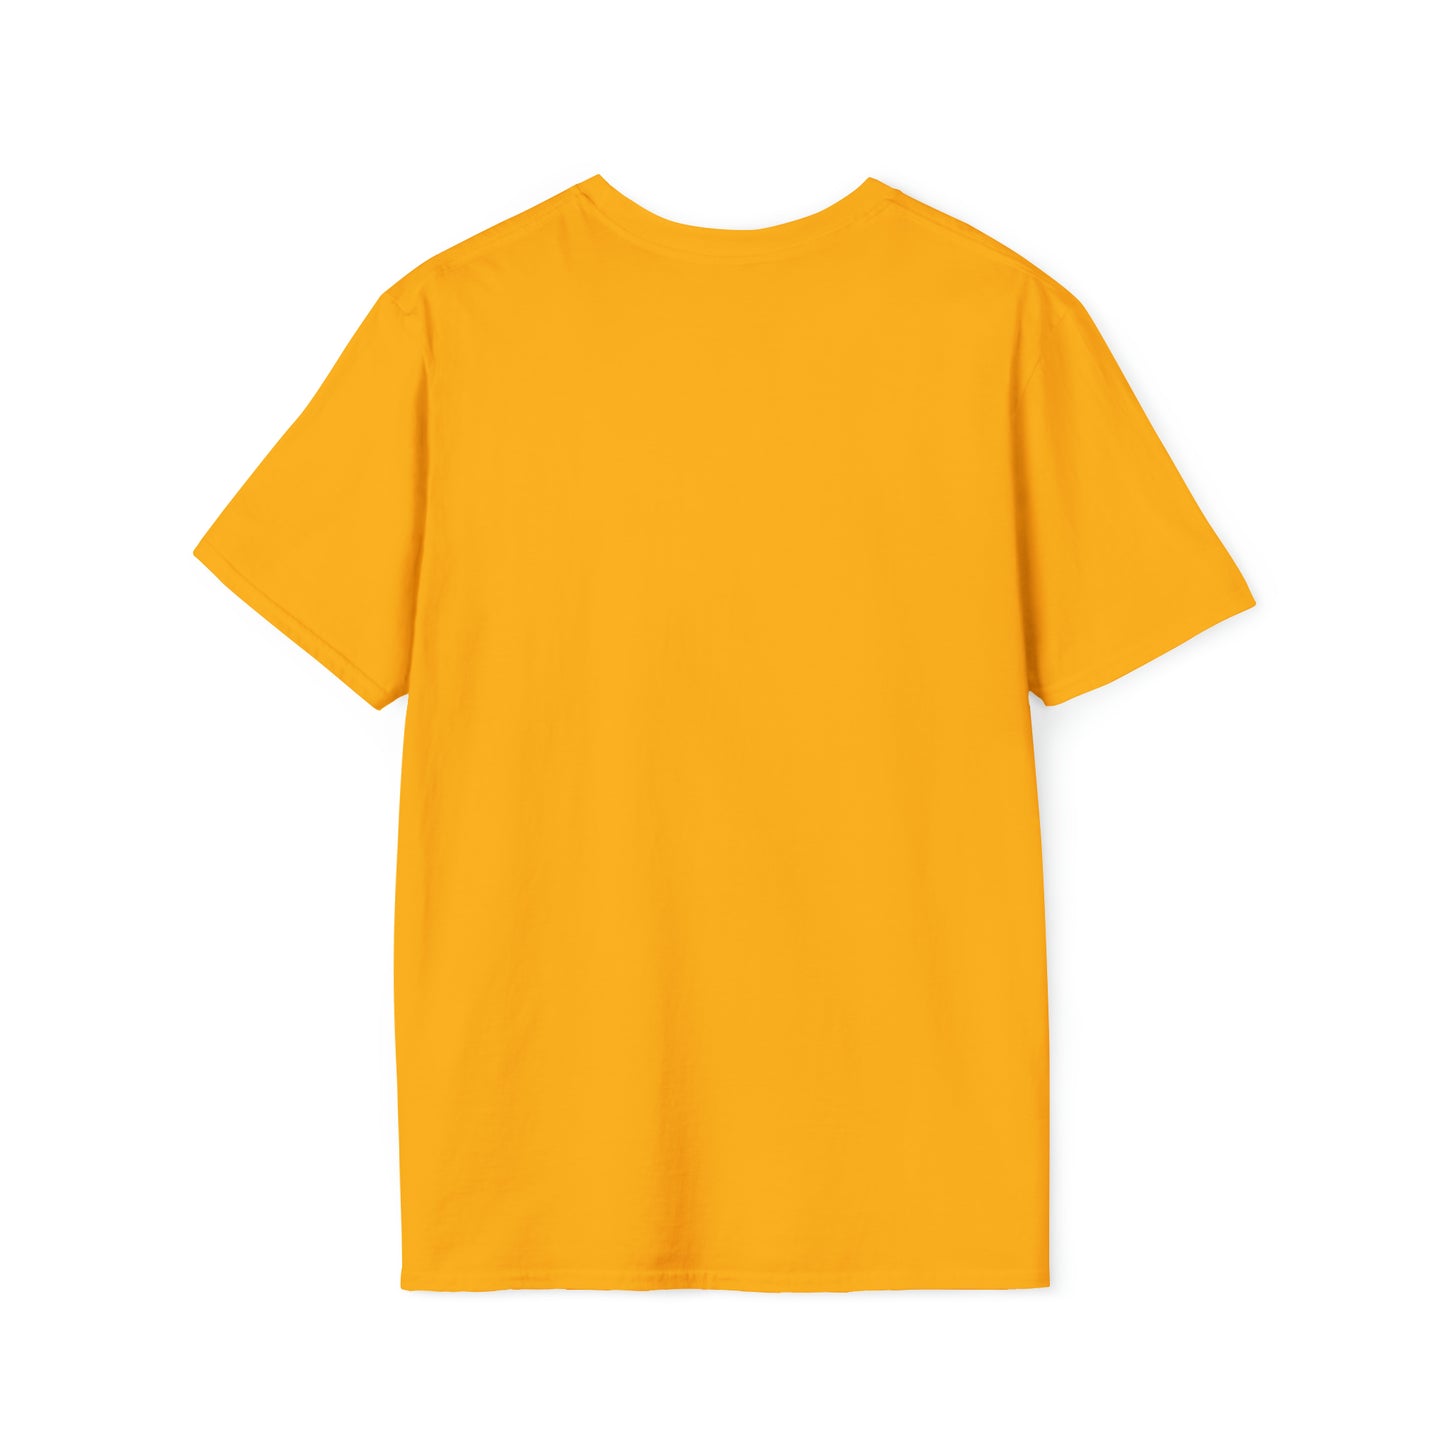 LOUD PROUD AGILITY DAD 1 -  Unisex Softstyle T-Shirt